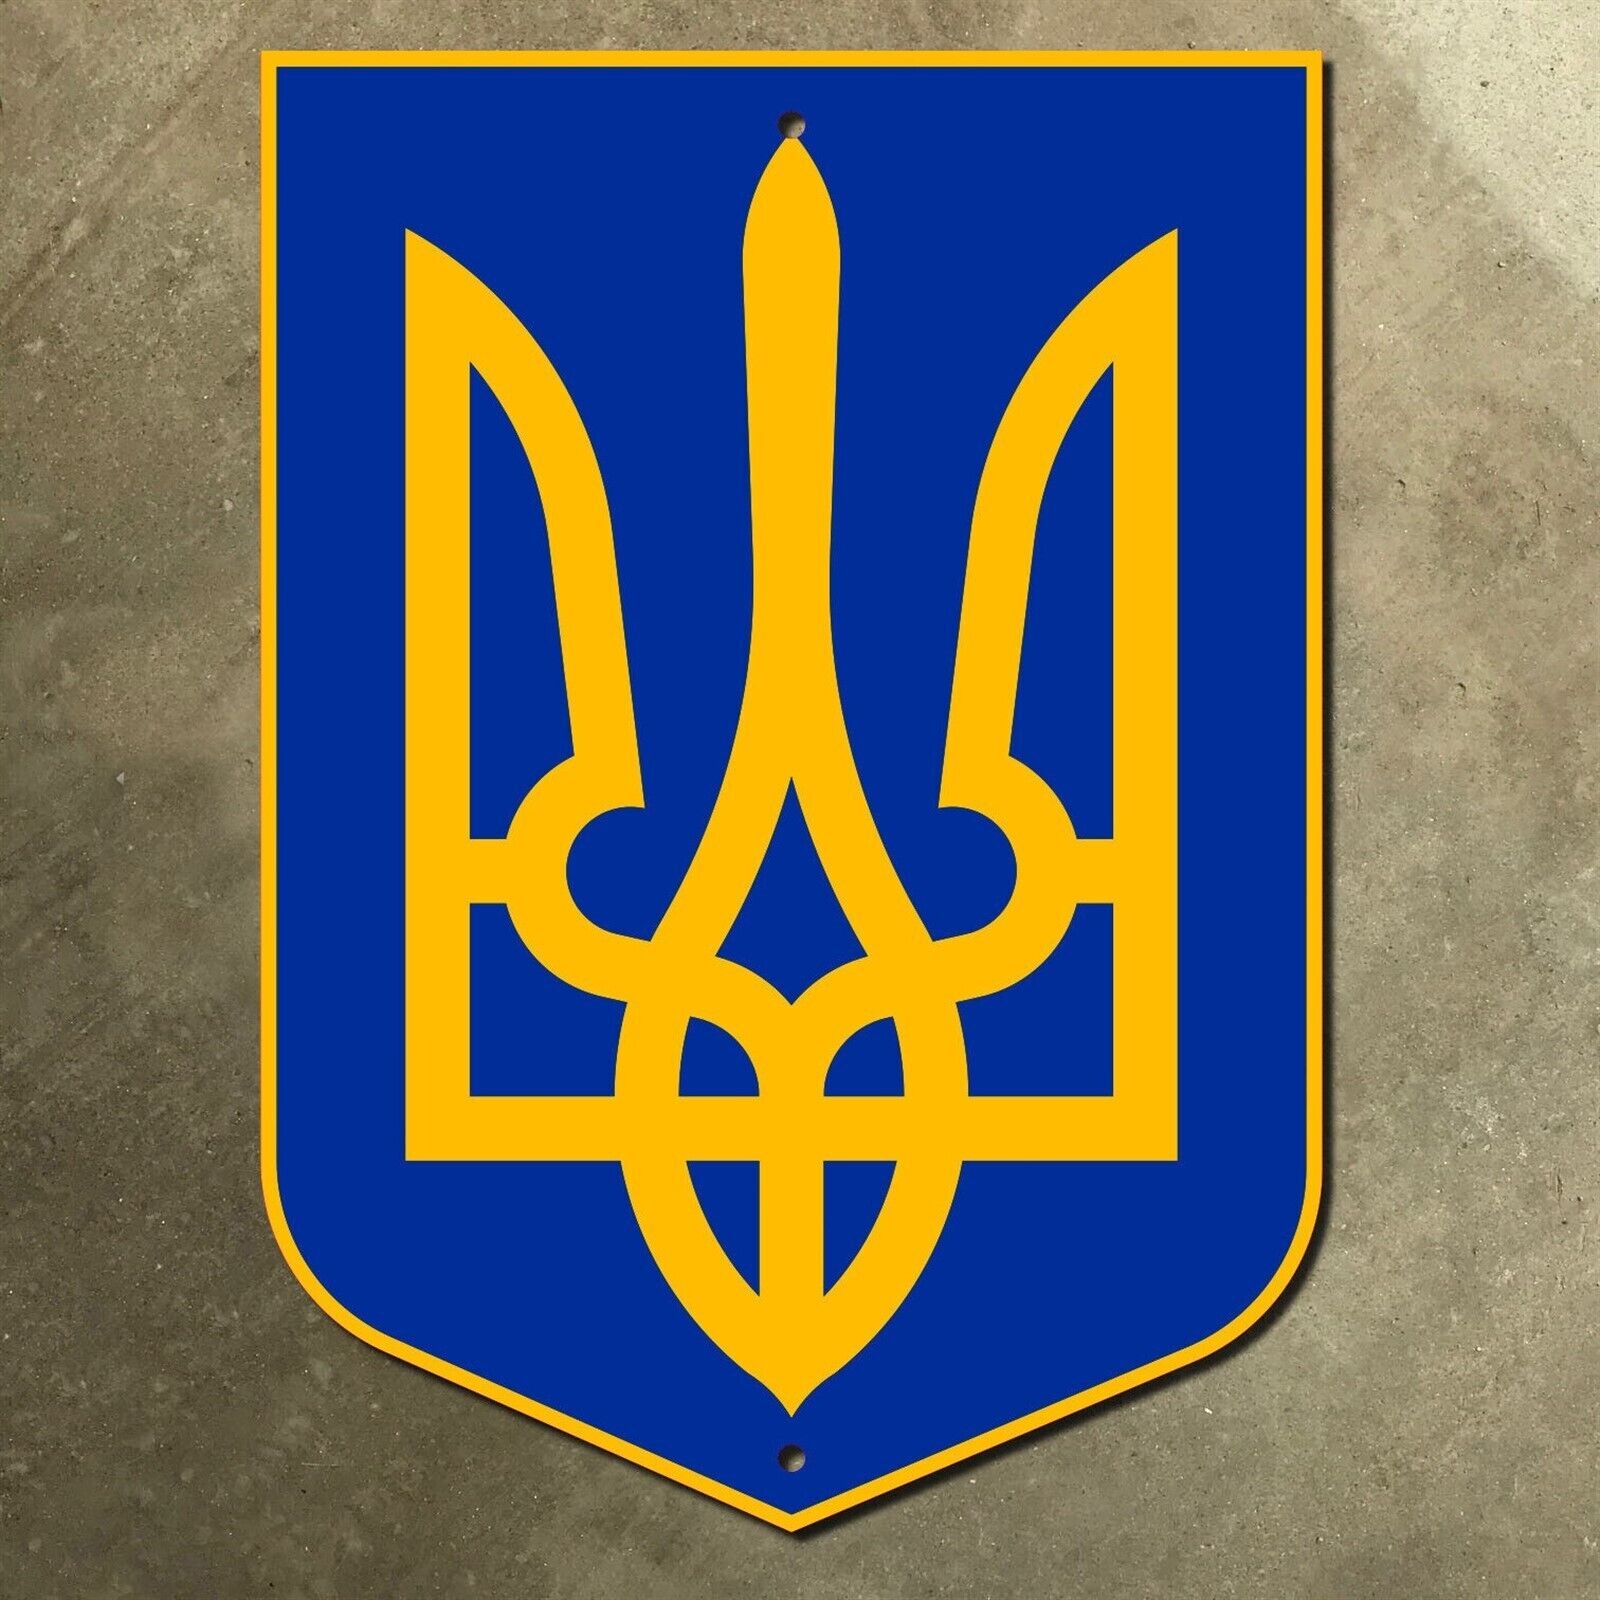 Ukraine trident coat of arms sign emblem shield 10x14 PROCEEDS TO UKRAINE RELIEF